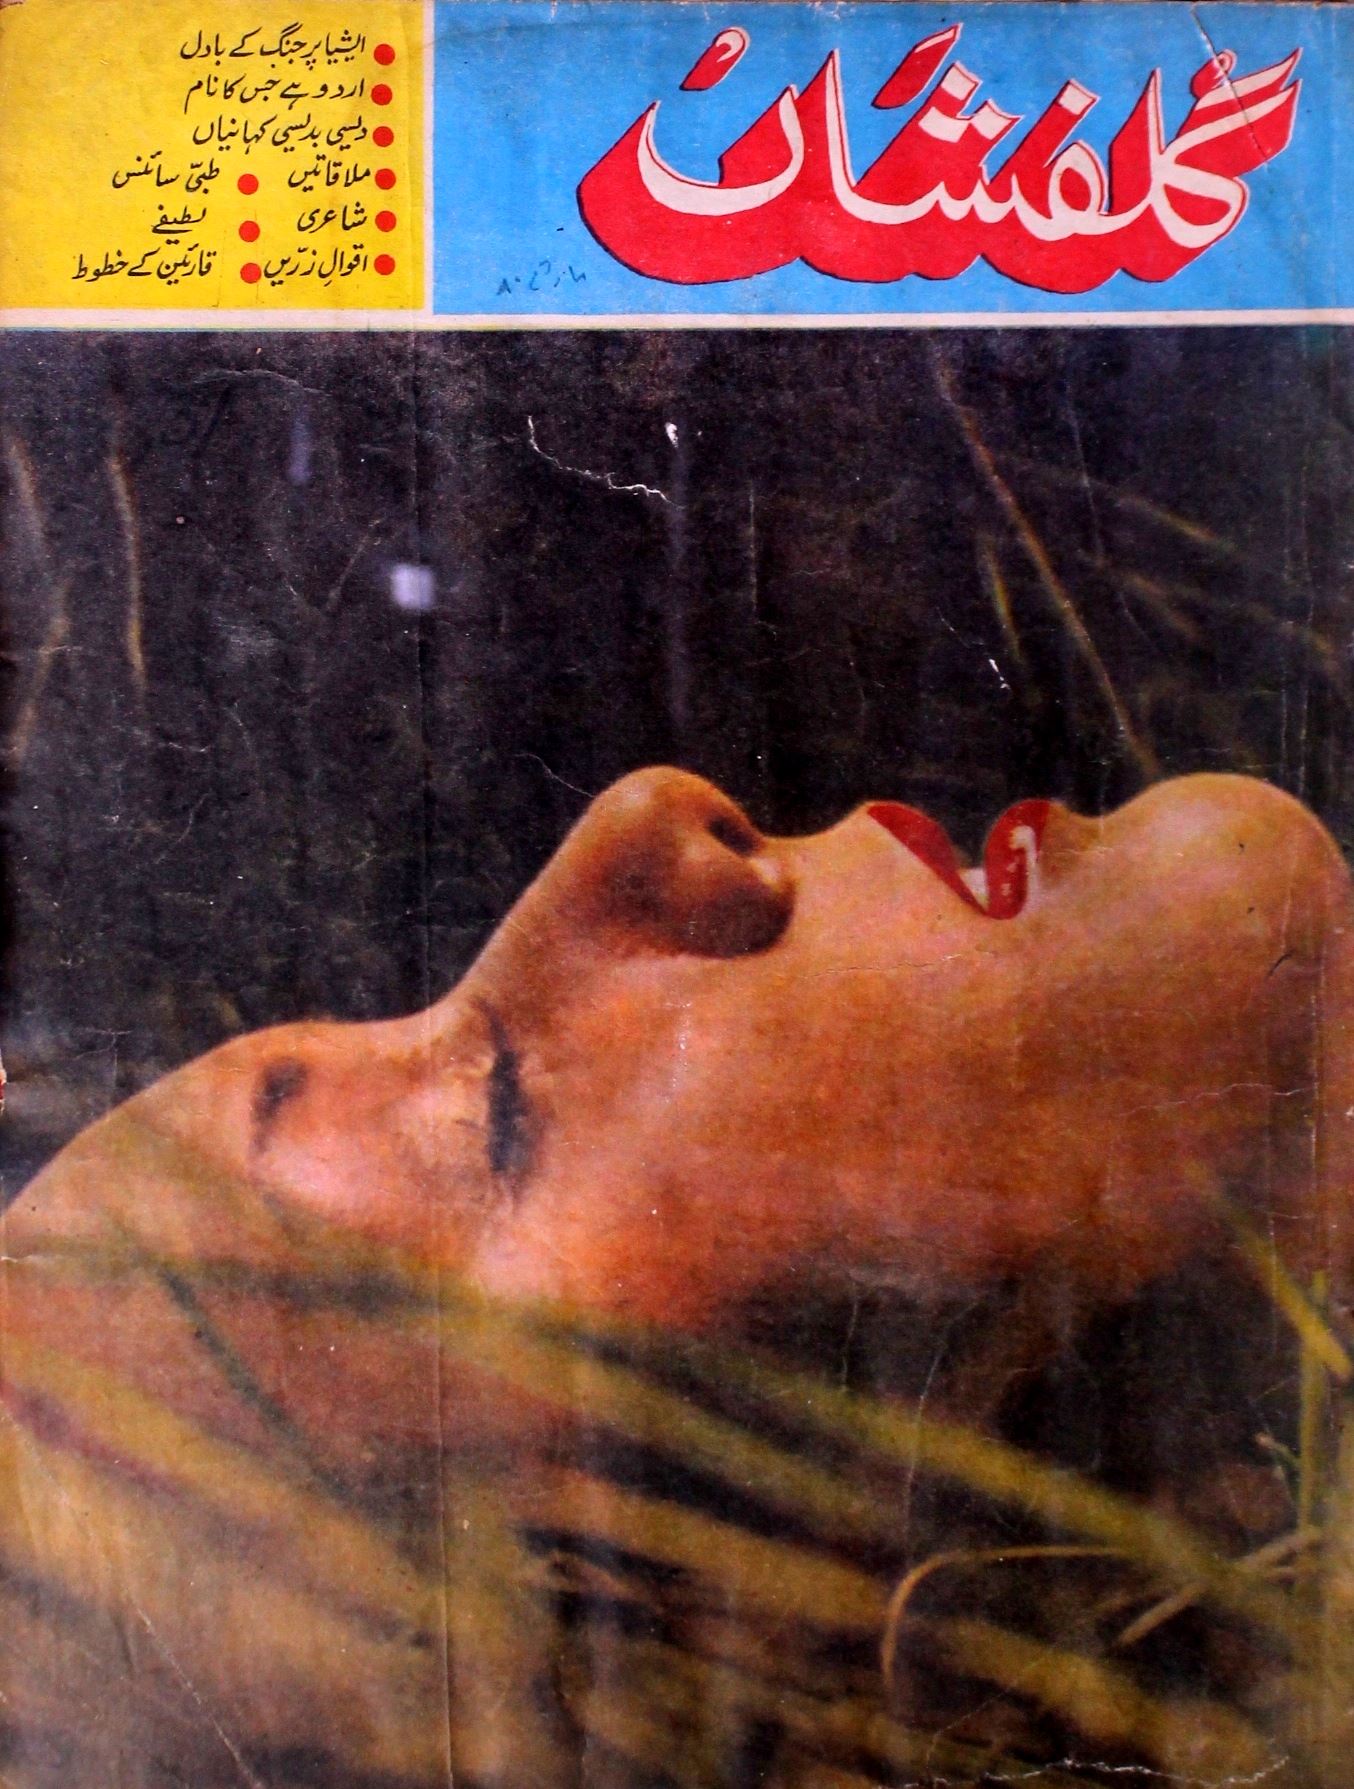 Gulafsha Jild 2 No 3 March 1980-SVK-Shumara Number-003